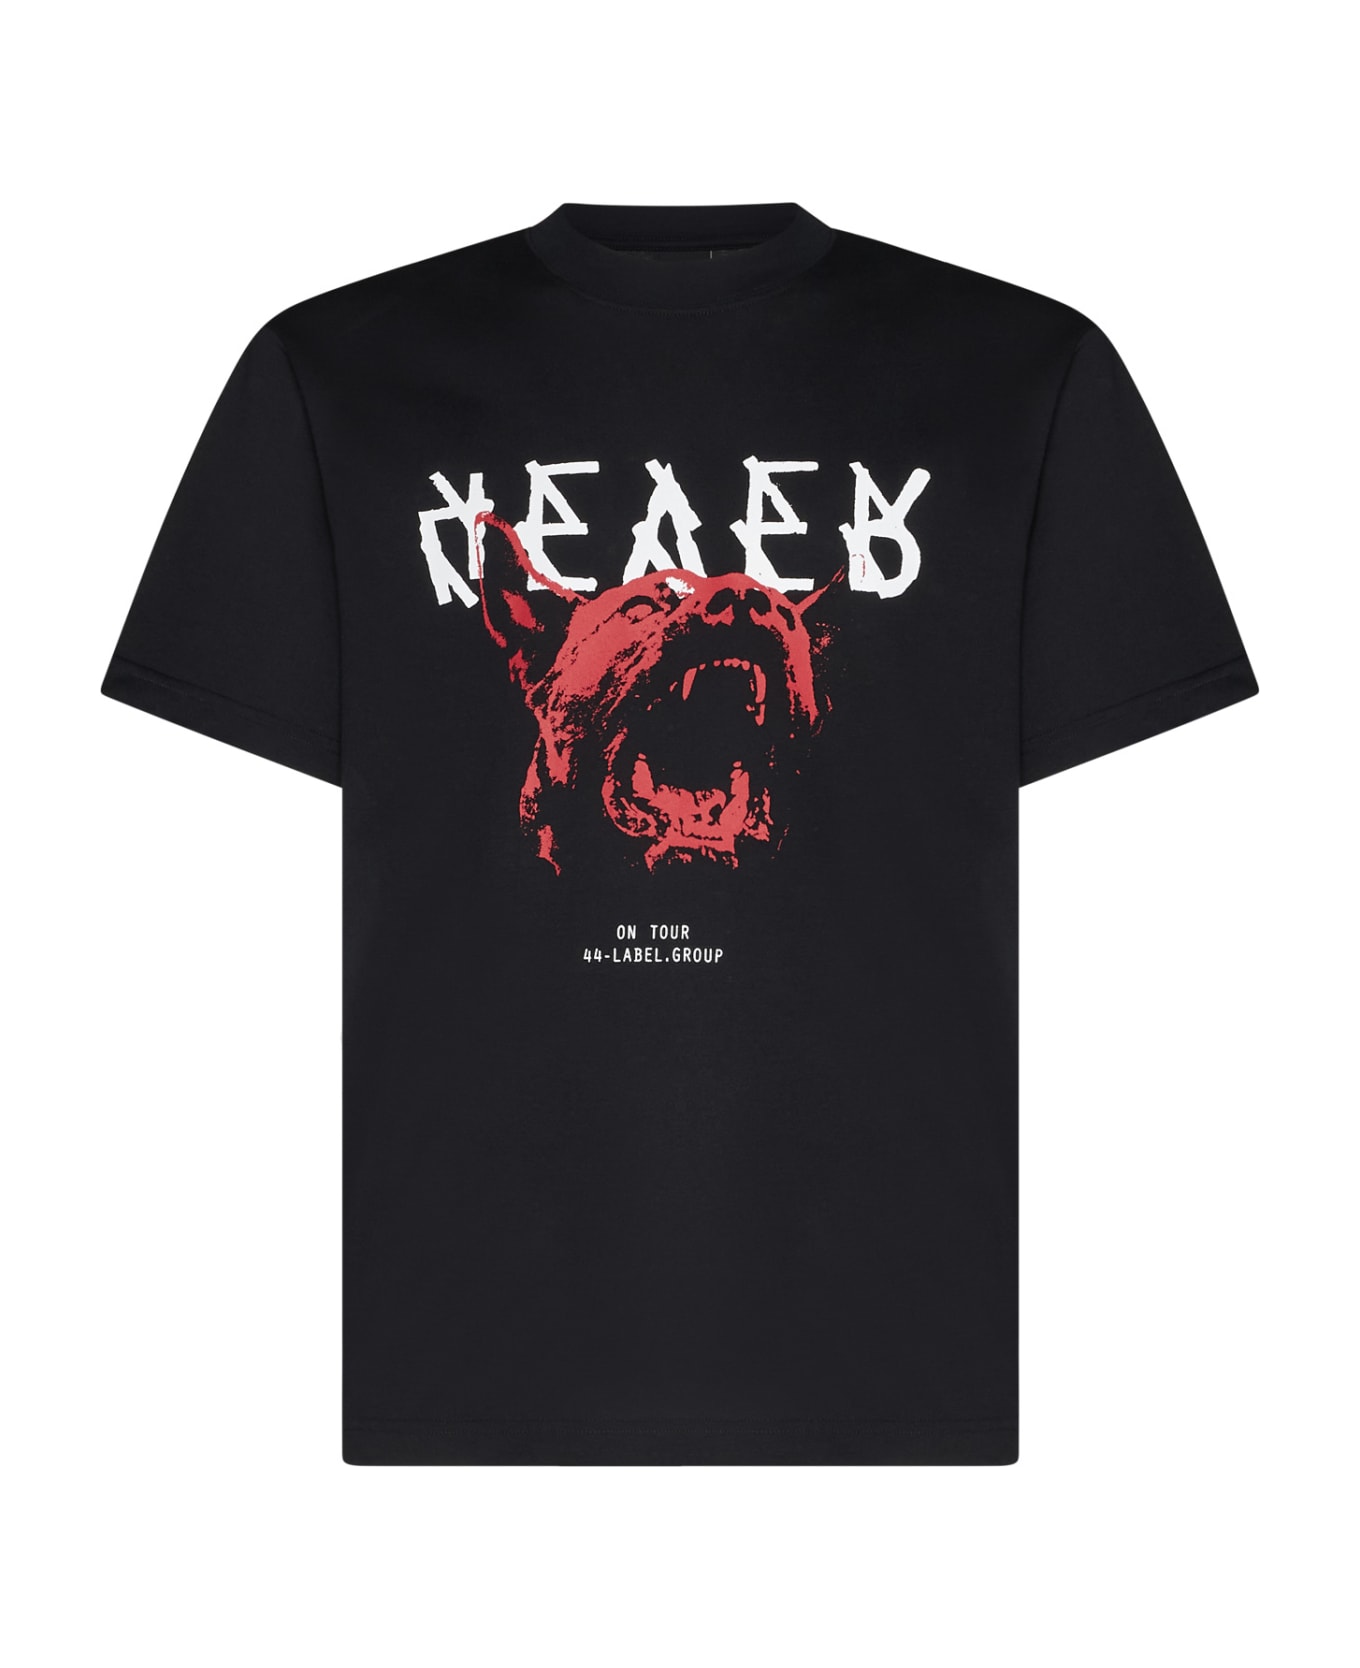 44 Label Group T-Shirt - Black+forever print シャツ